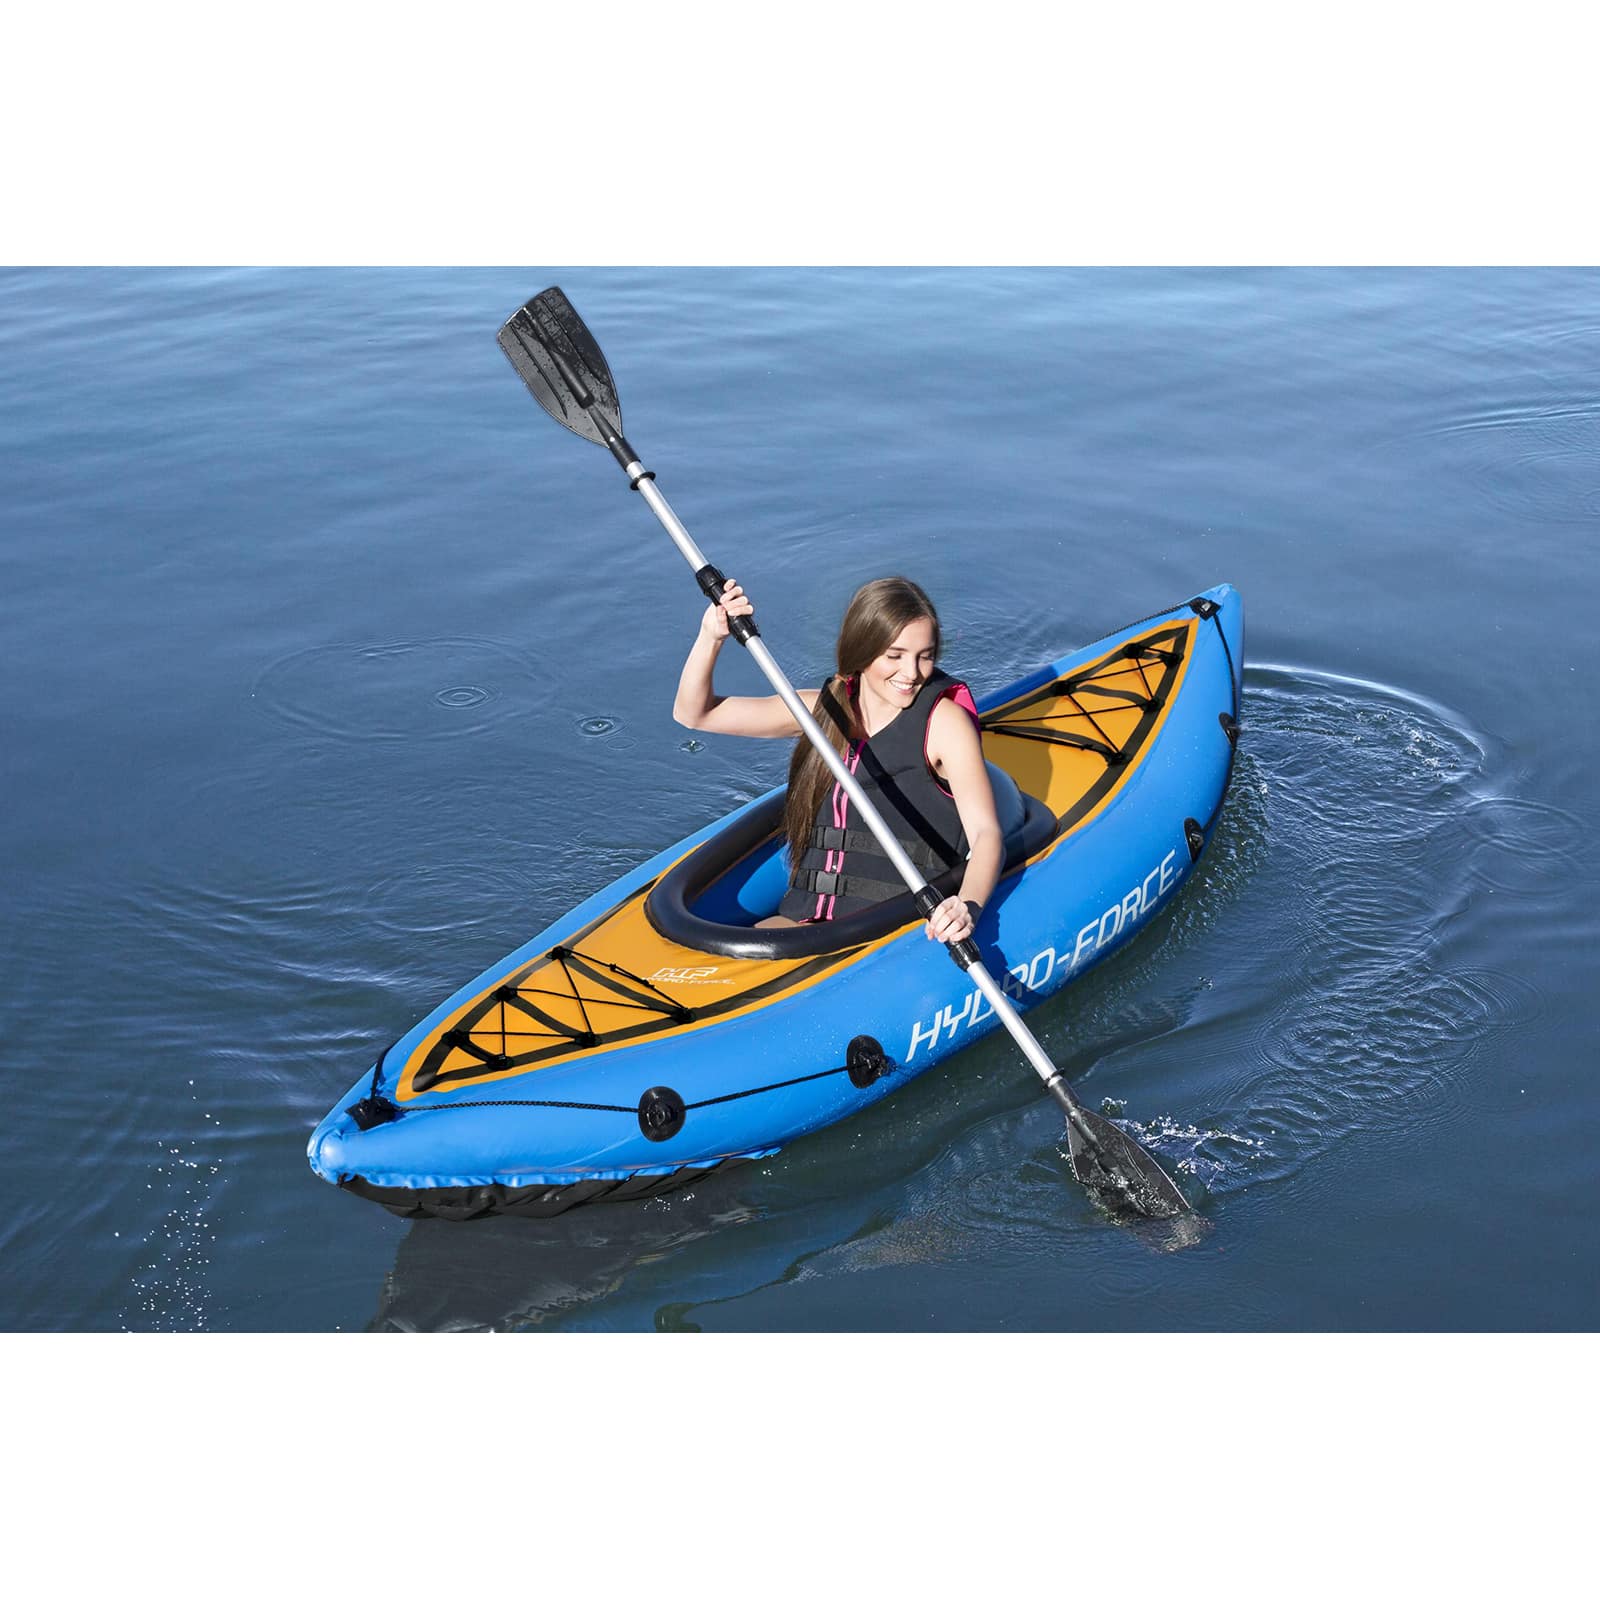 Kayak Insuflável Bestway Hydro-force Cove Champion Bestway